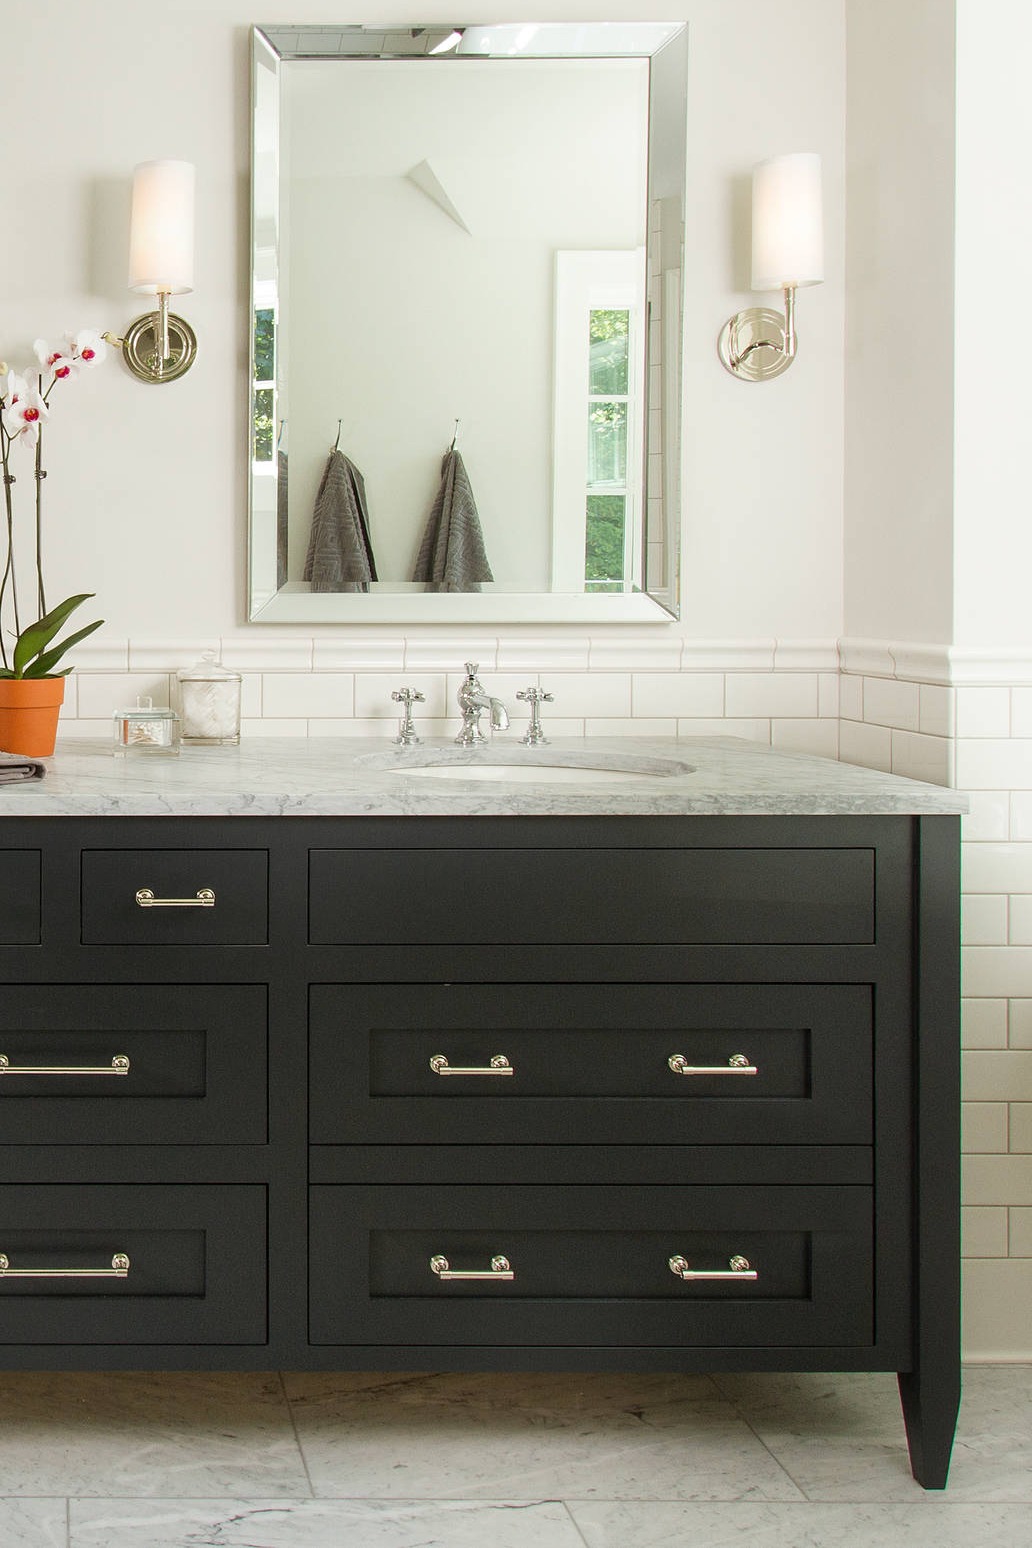 Black Shaker Bathroom Vanity Cabinet White Carrara Marble Countertop Floor Subway Backpslash Tile